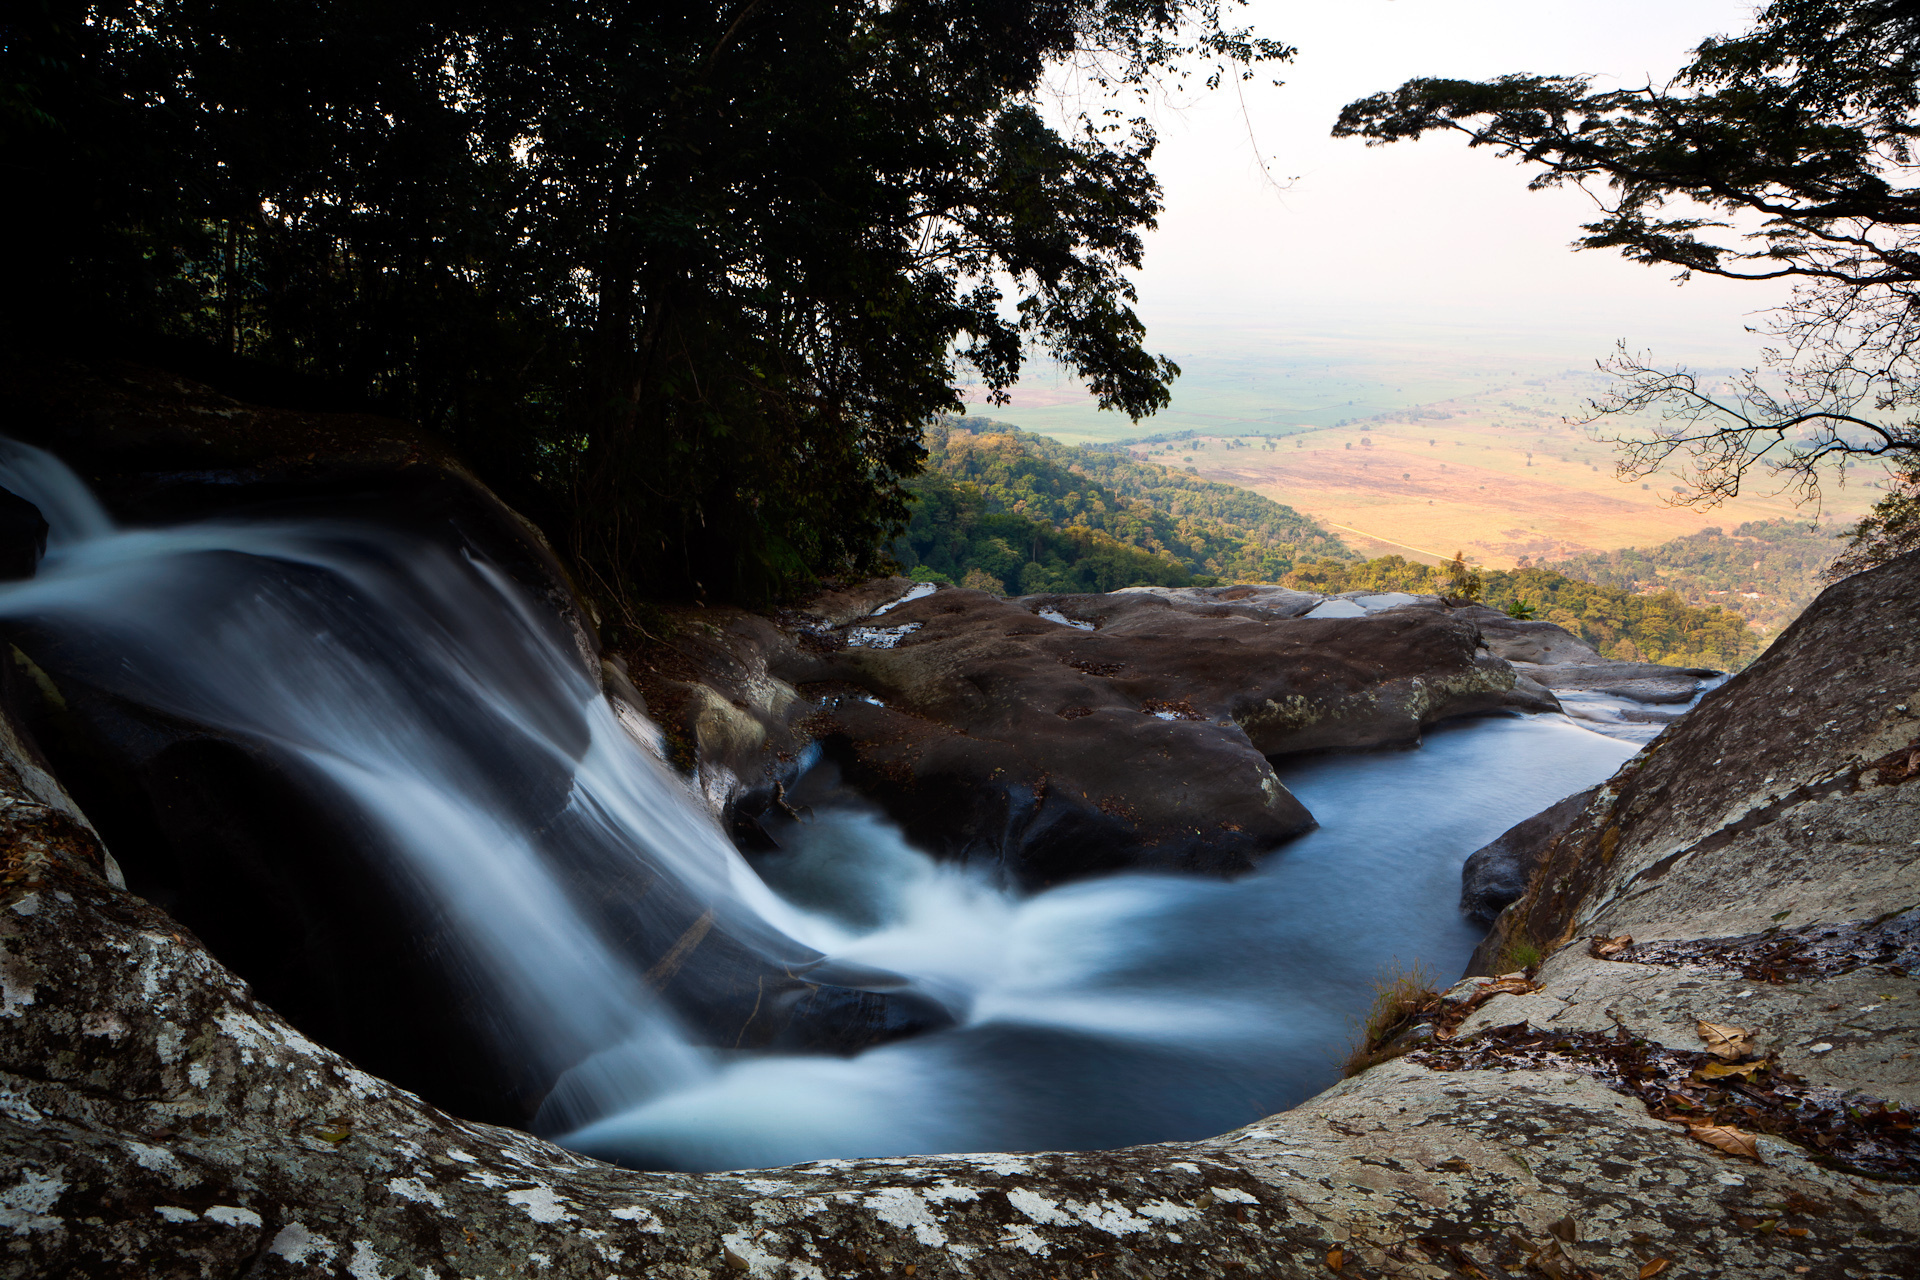 Sanje Waterfall in Udzungwa National Park, Tanzania